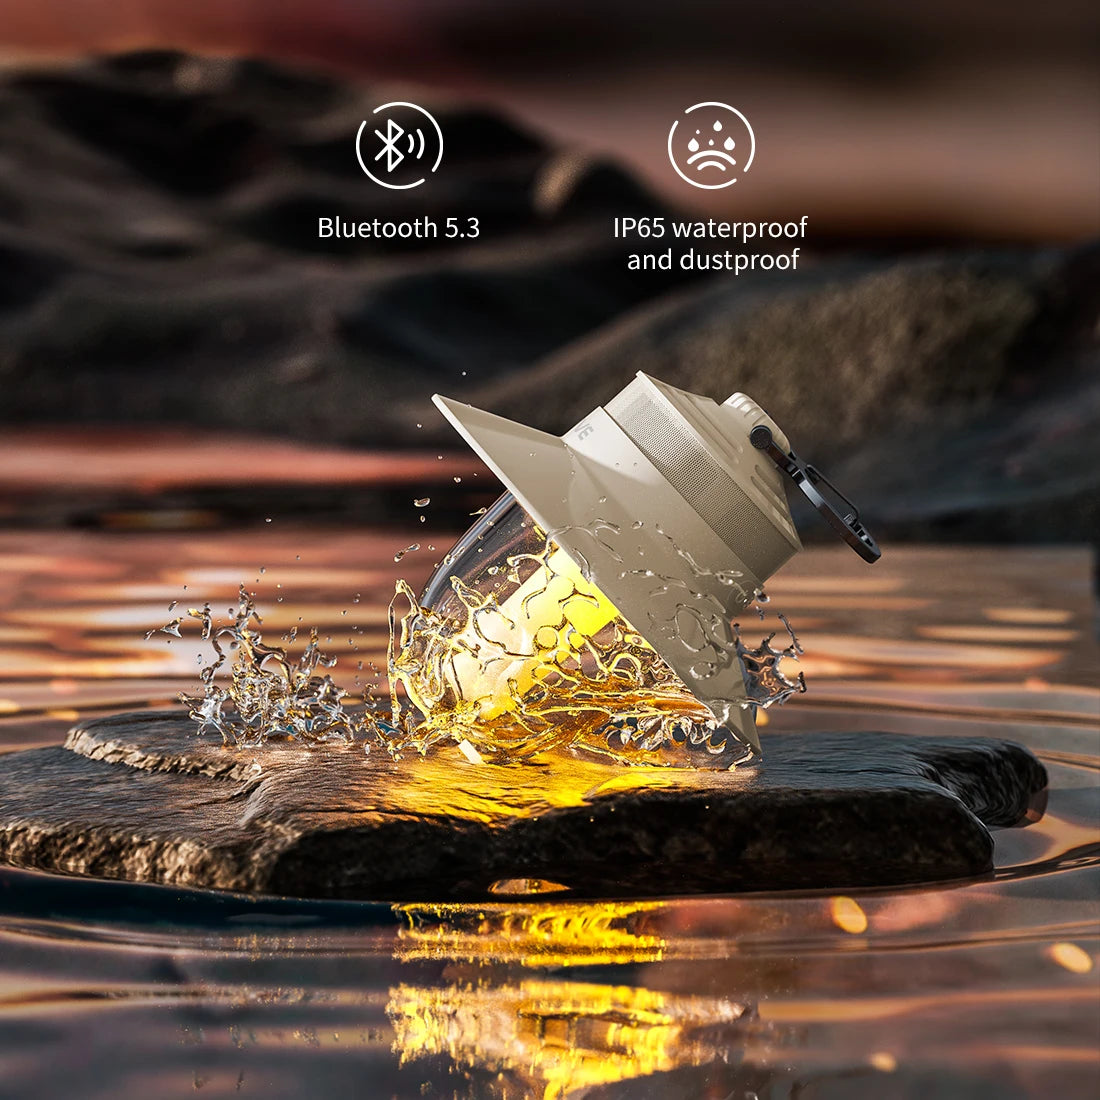 Waterproof Bluetooth Camping Lantern with Speaker